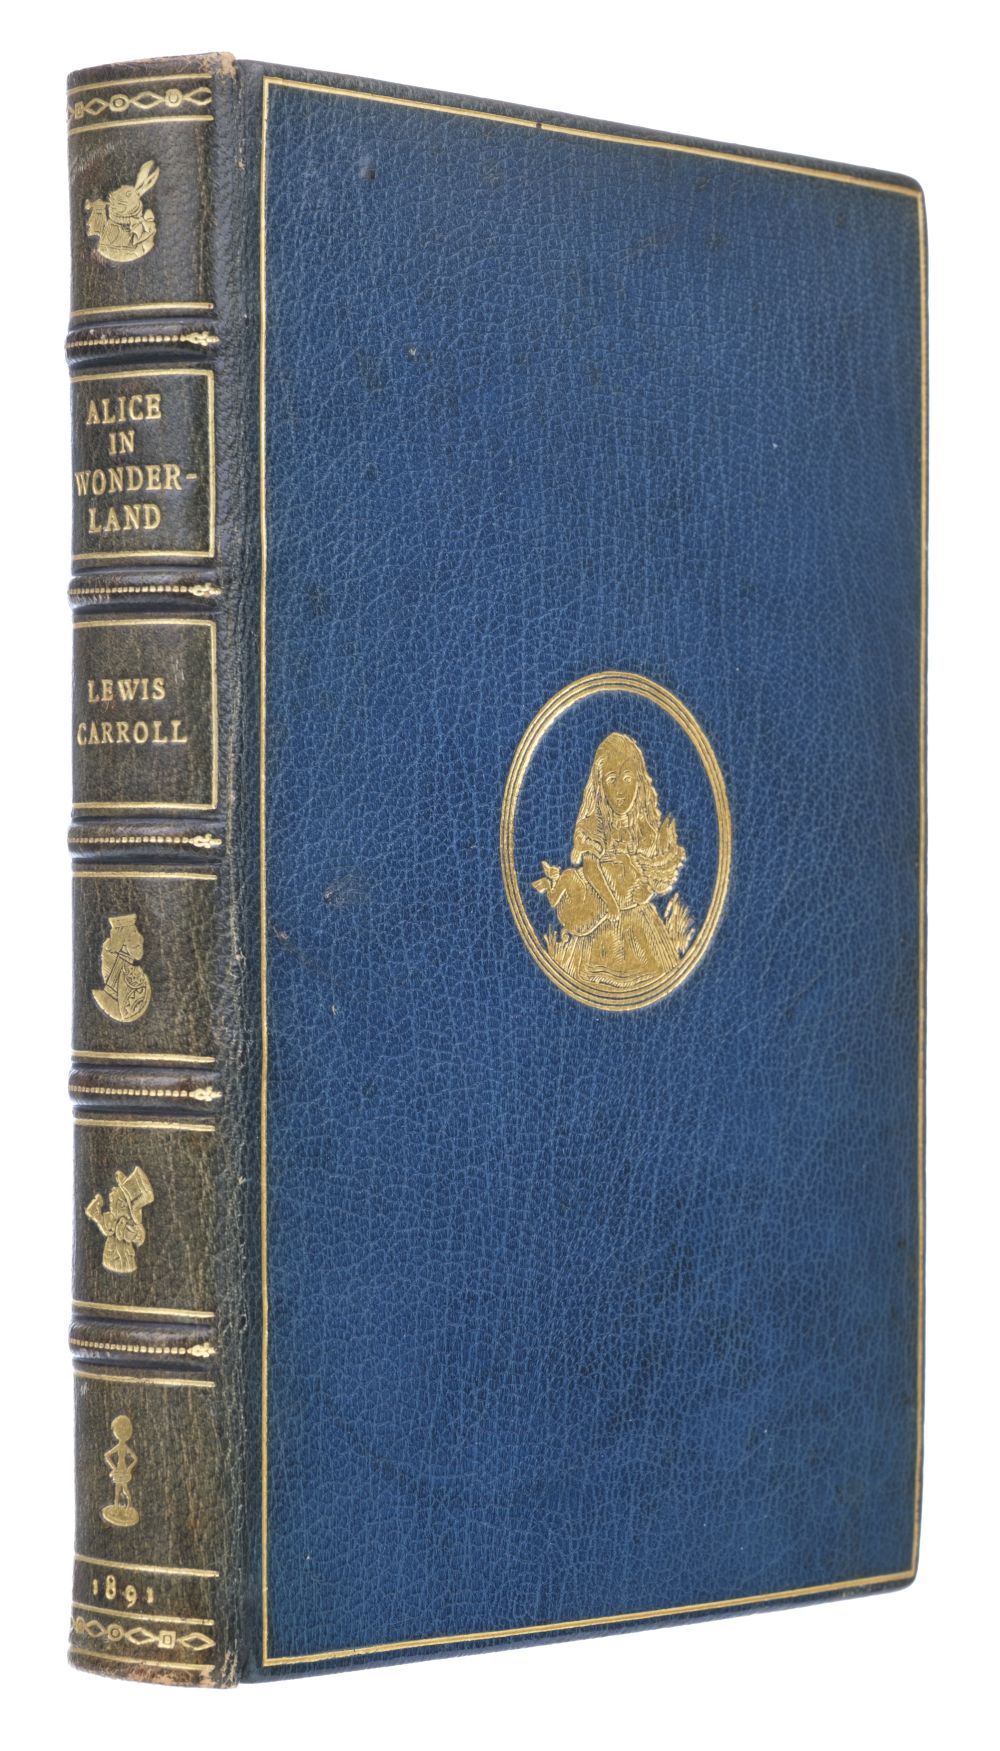 Dodgson (Charles Luttwidge "Lews Carroll). Alice's Adventures in Wonderland, 1891